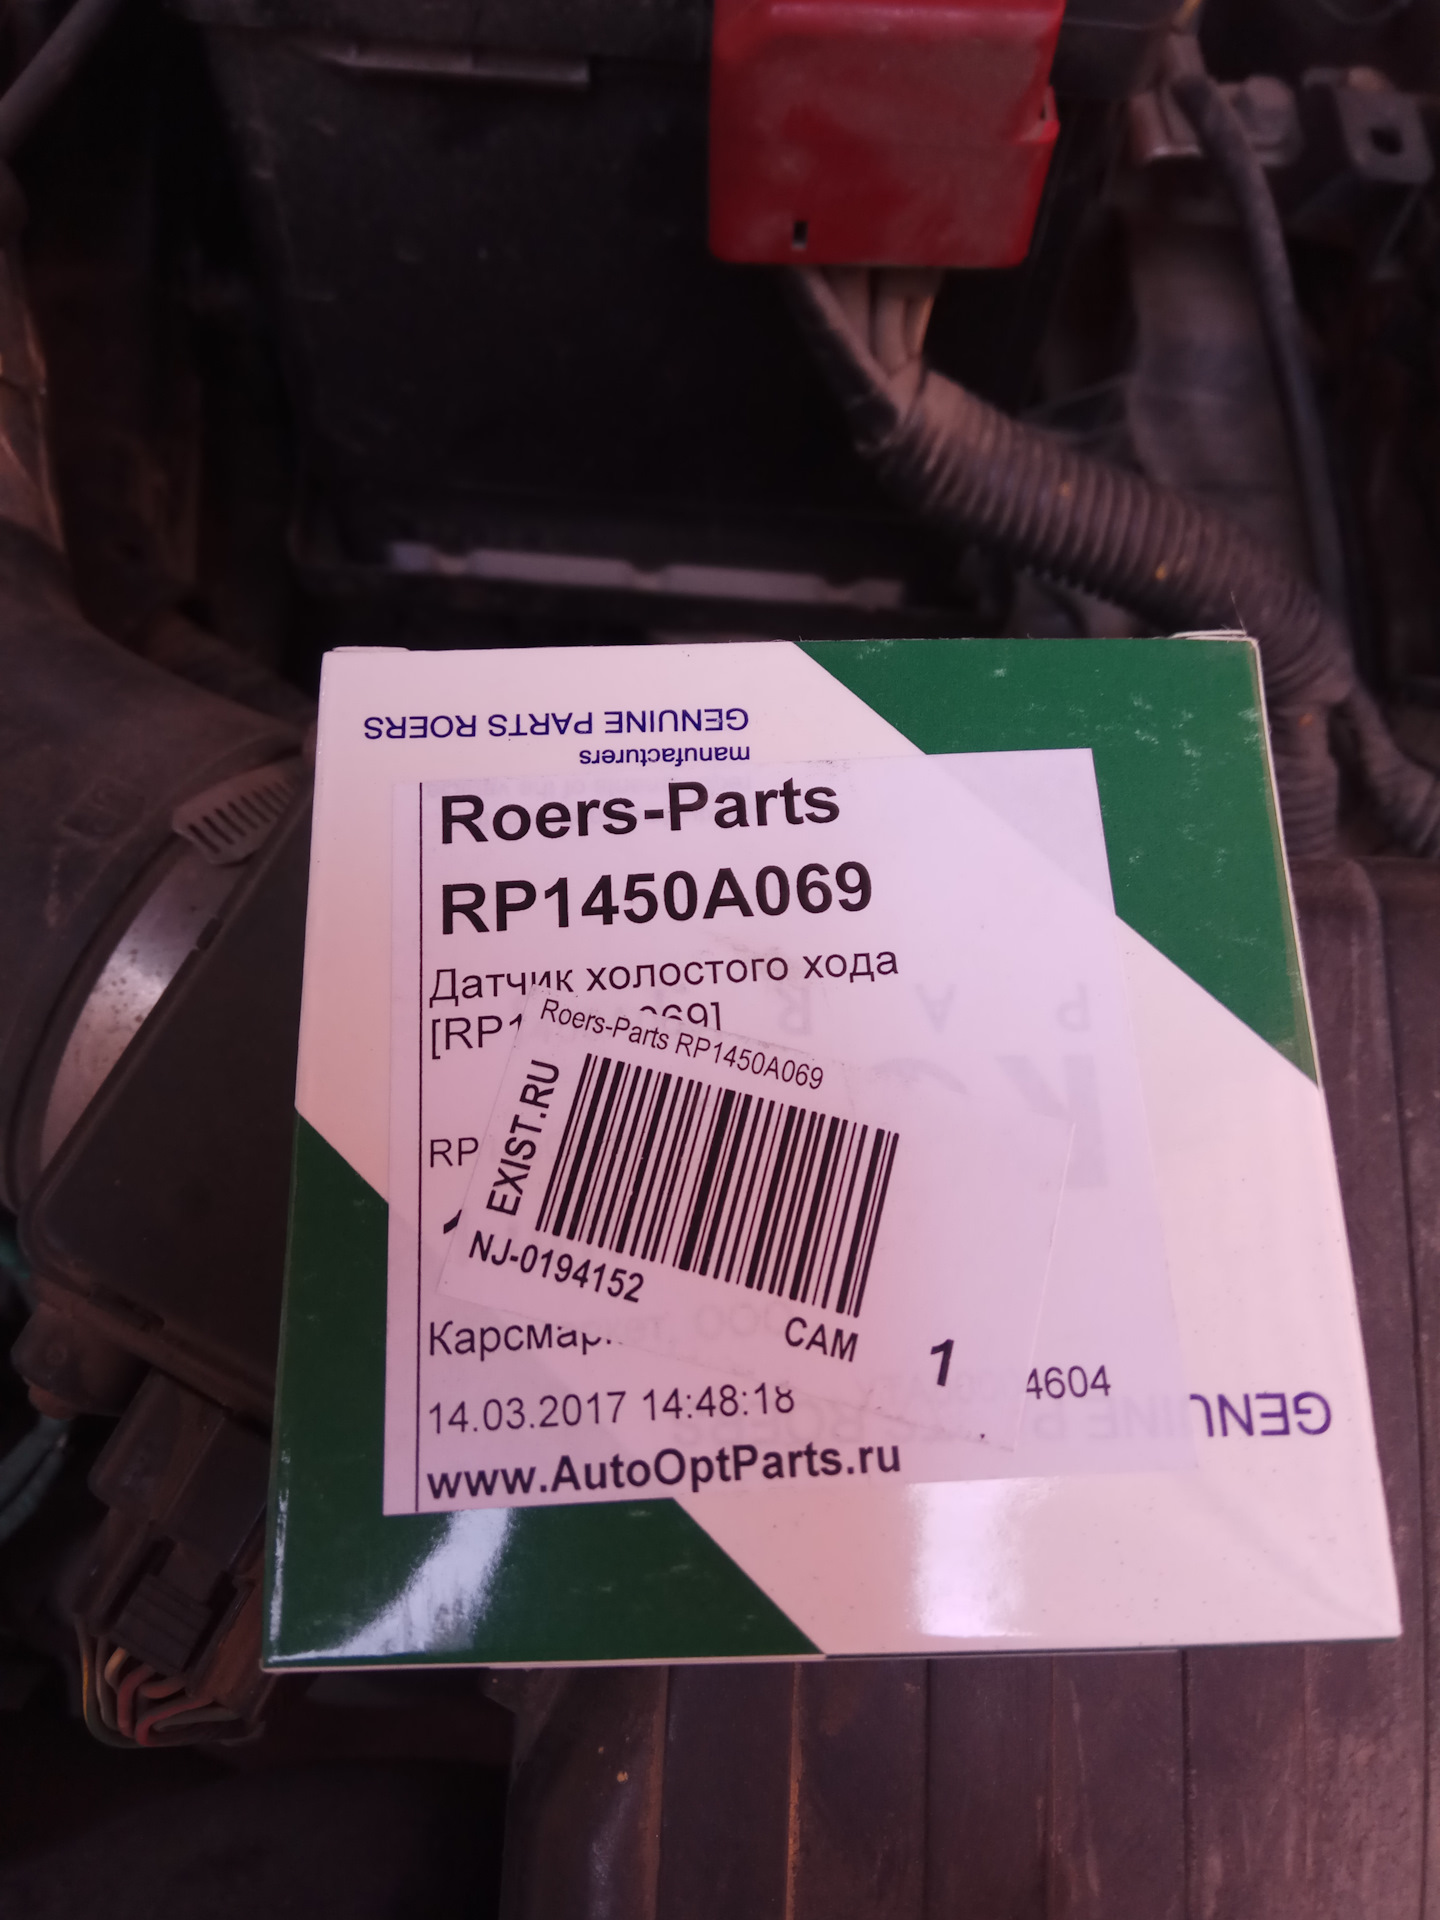 Roers parts производитель. Mitsubishi 1450a069датчик холостого хода. @ Rp1450a069 roers-Parts регулятор холостого хода. Датчик холостого хода Lancer 9 roers Parts. Rp1450a069.